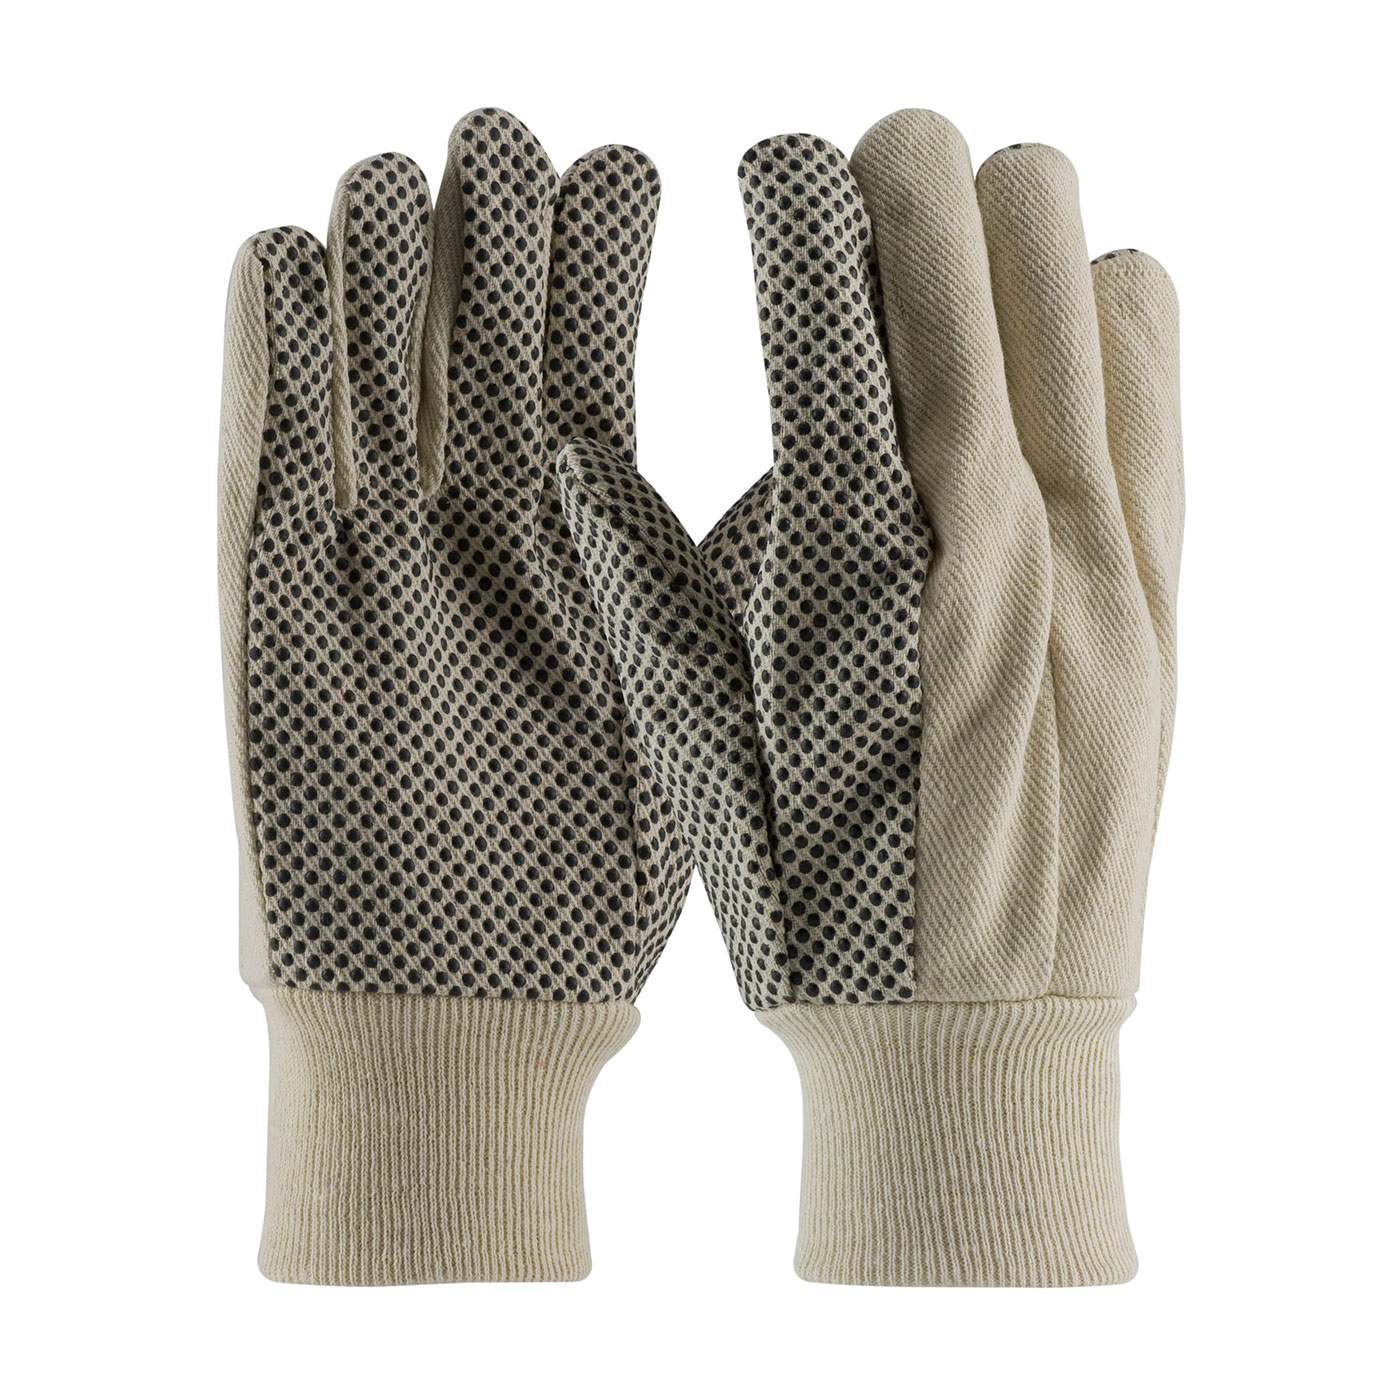 PIP Men's Economy Grade Natural 10 oz. PVC Dot Grip Cotton Canvas Gloves